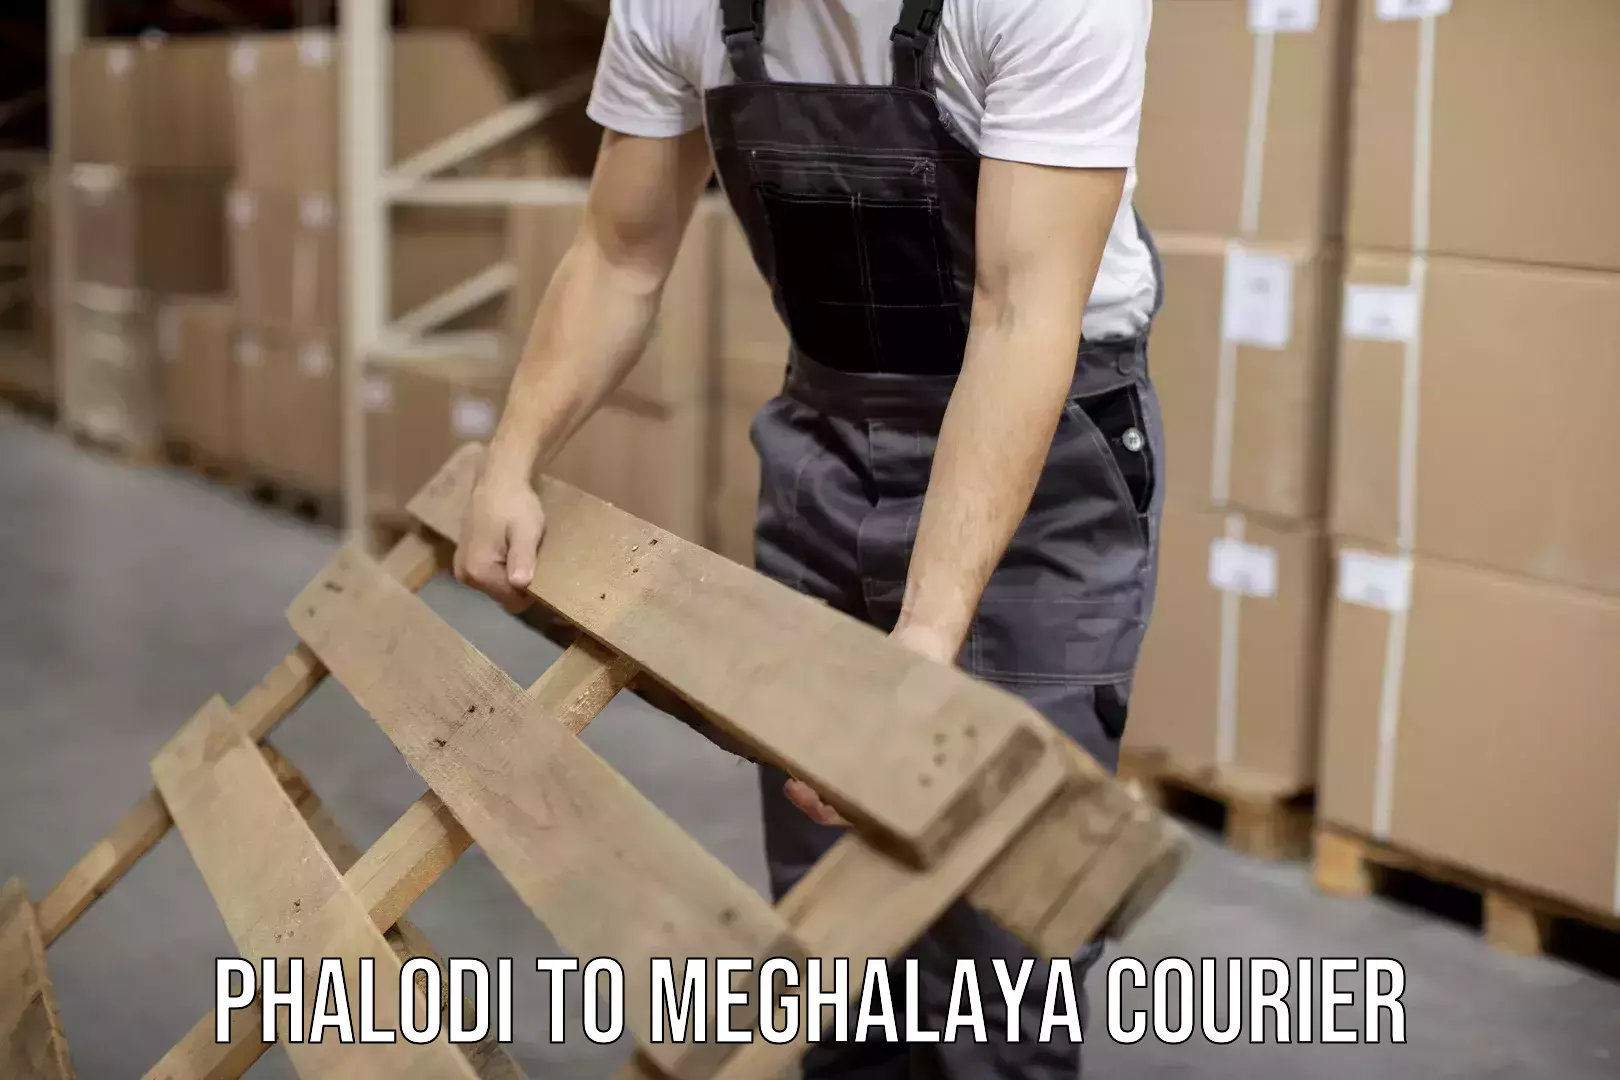 Courier service booking Phalodi to Meghalaya